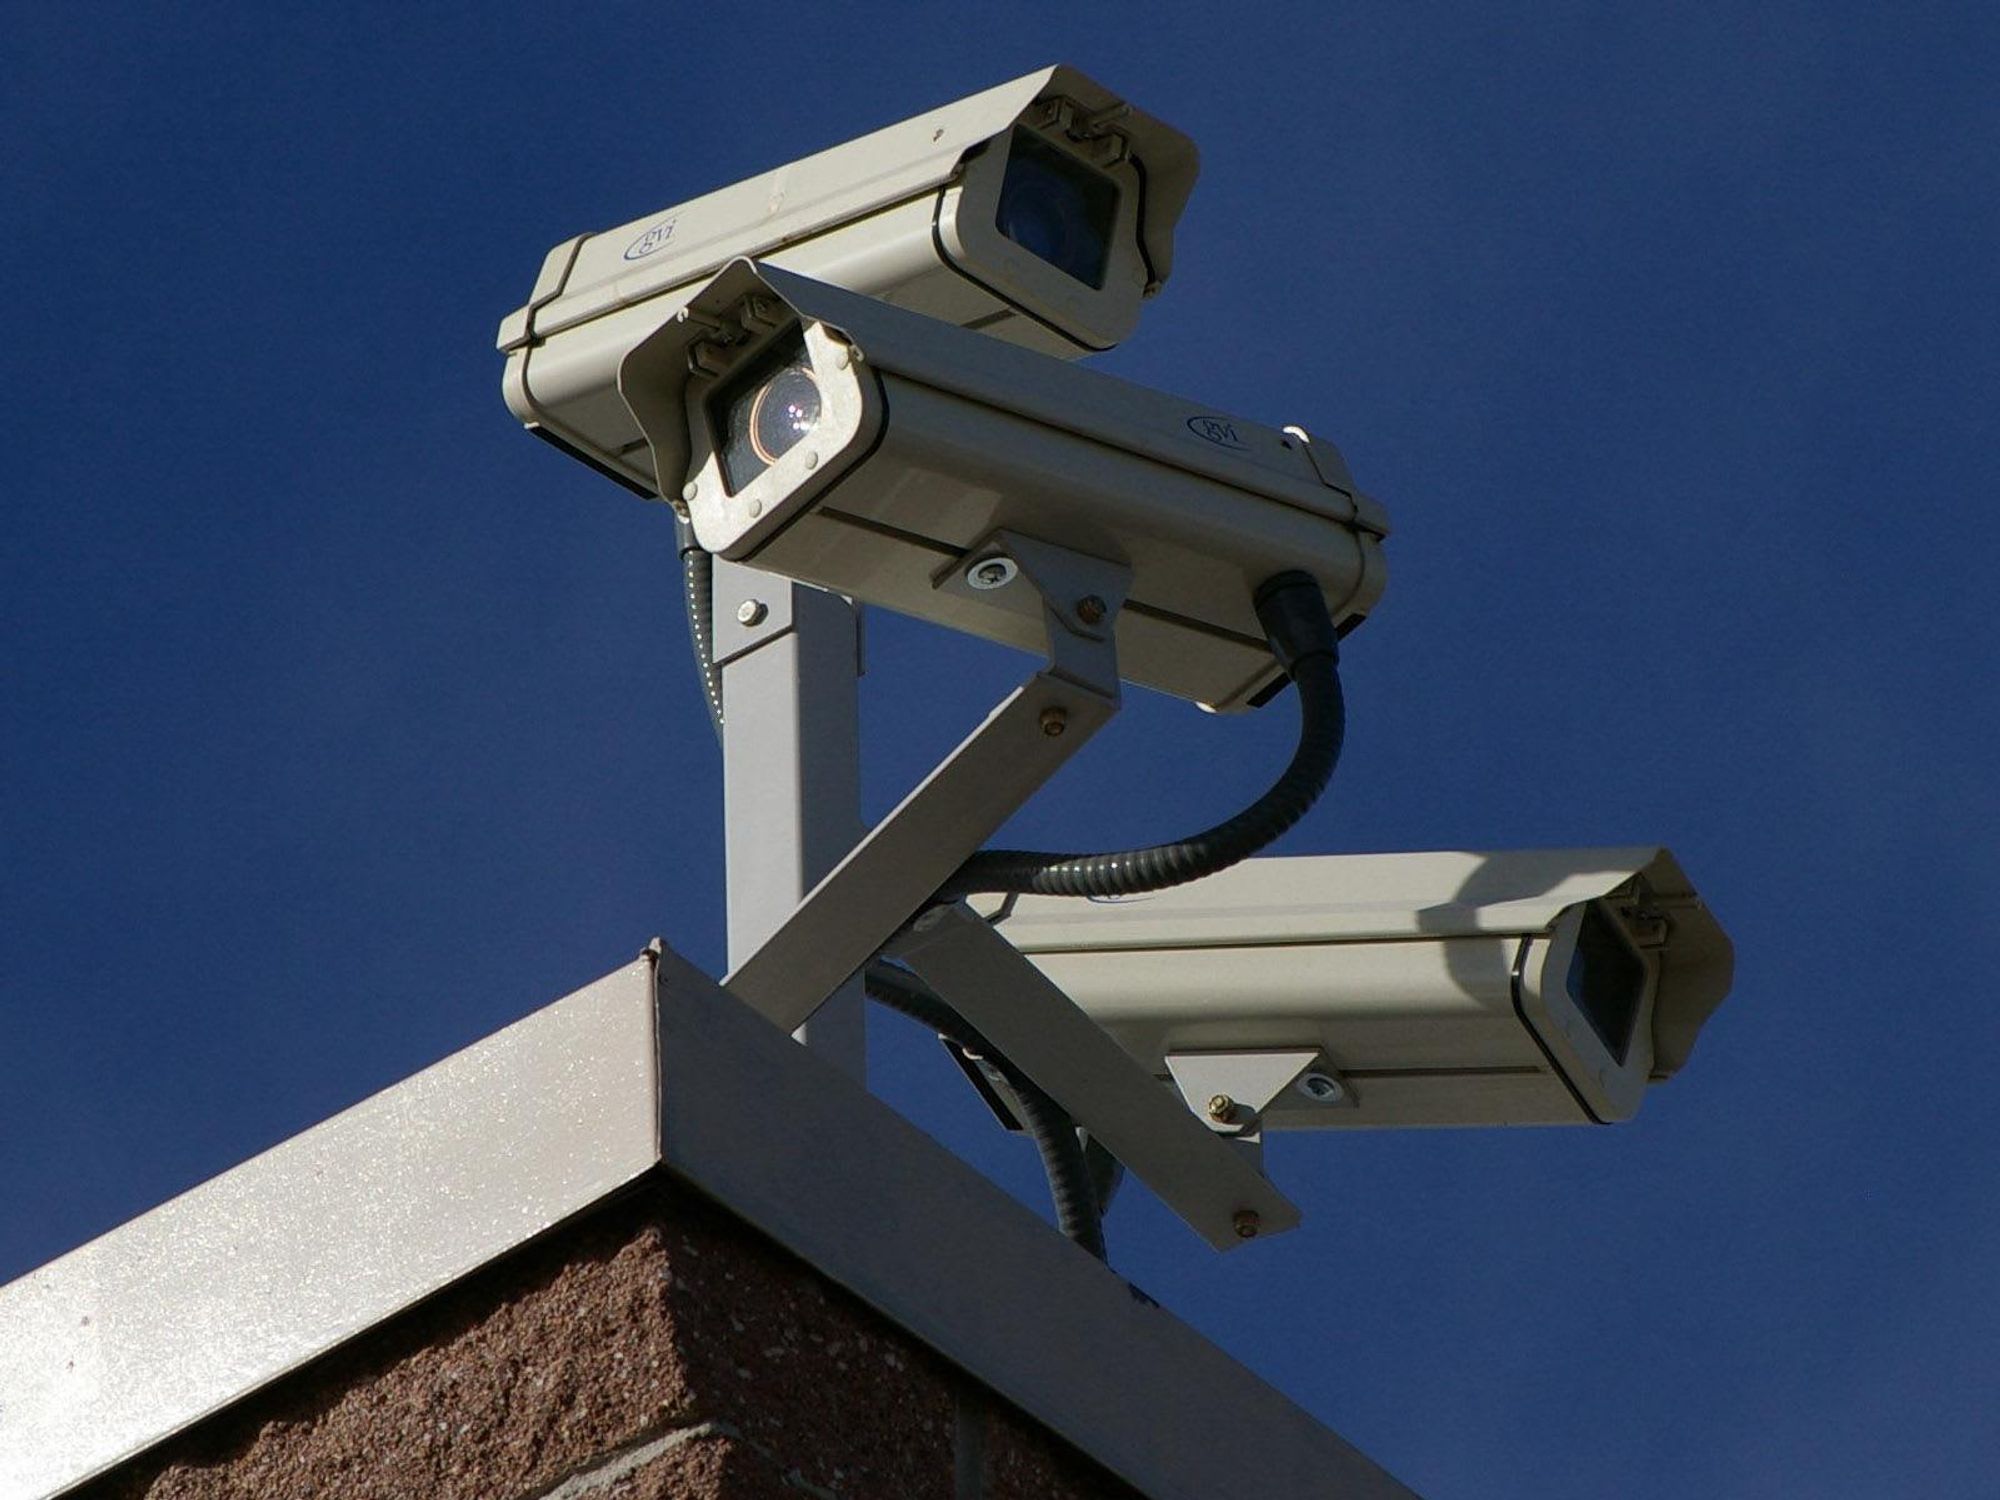 News_surveillance cameras